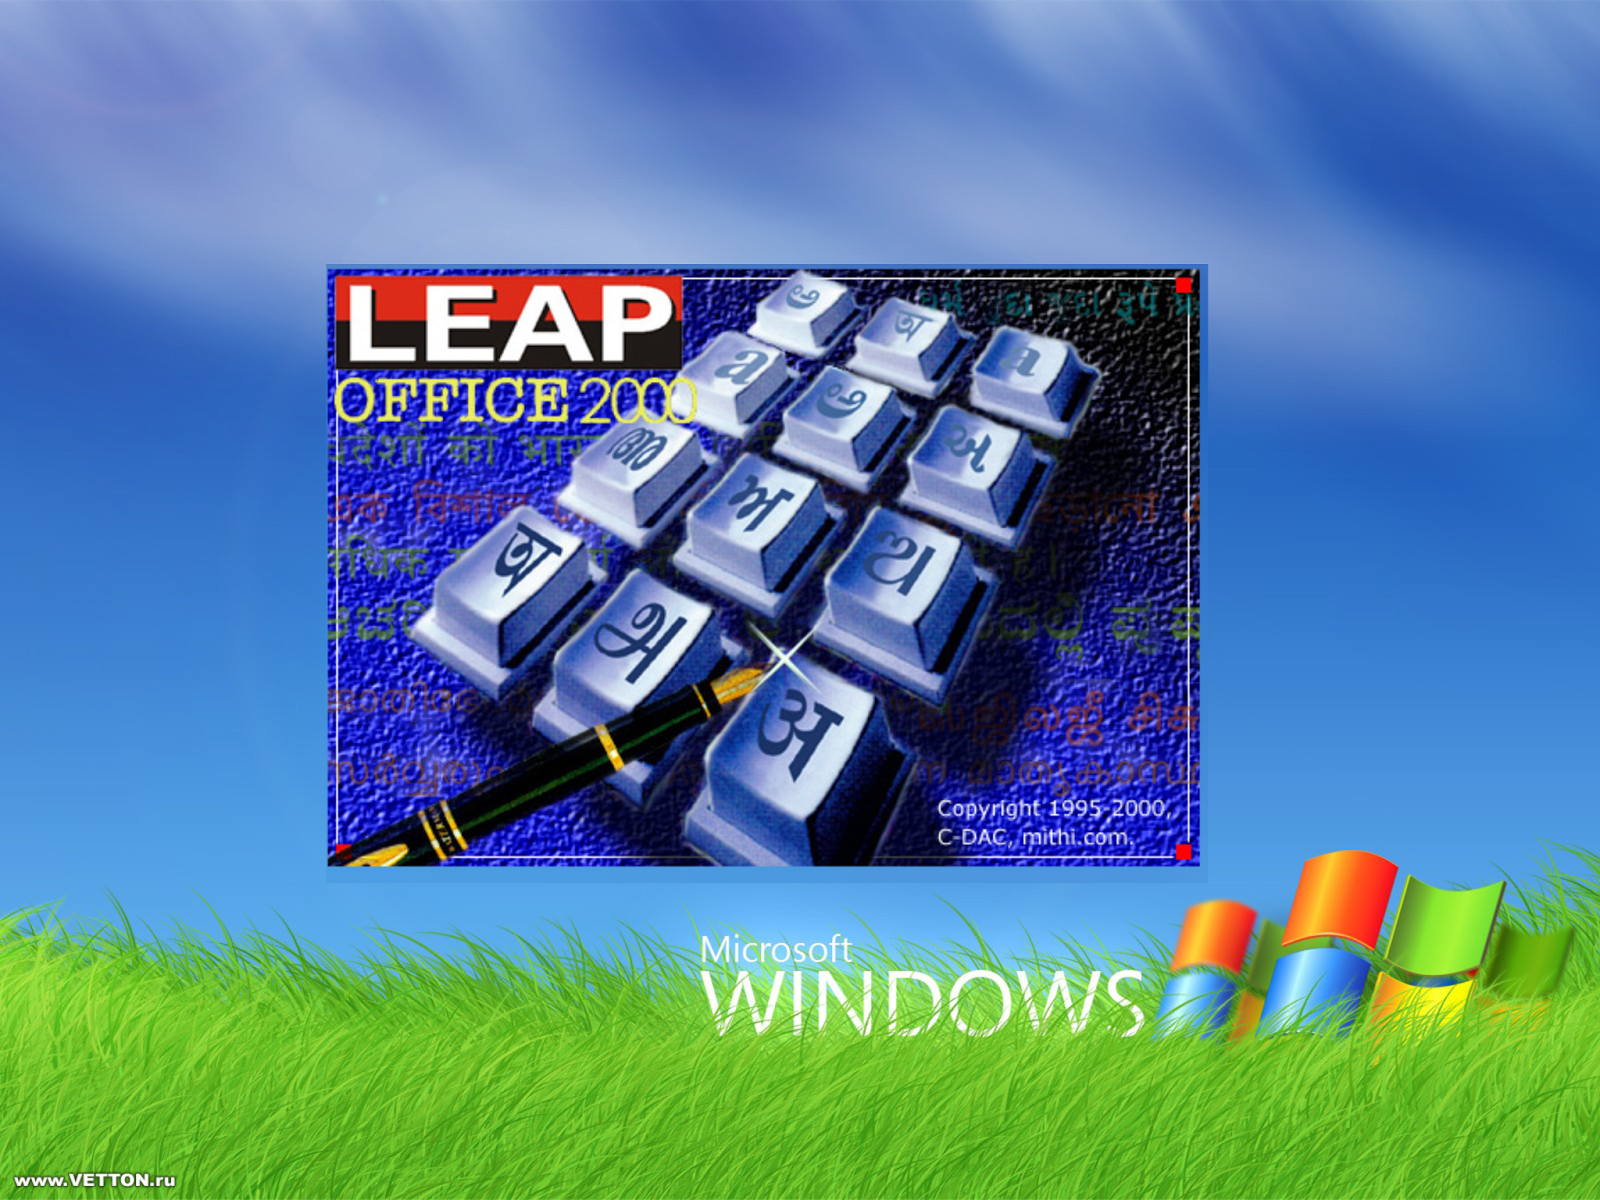 Leap office 2000 64 bit free download full